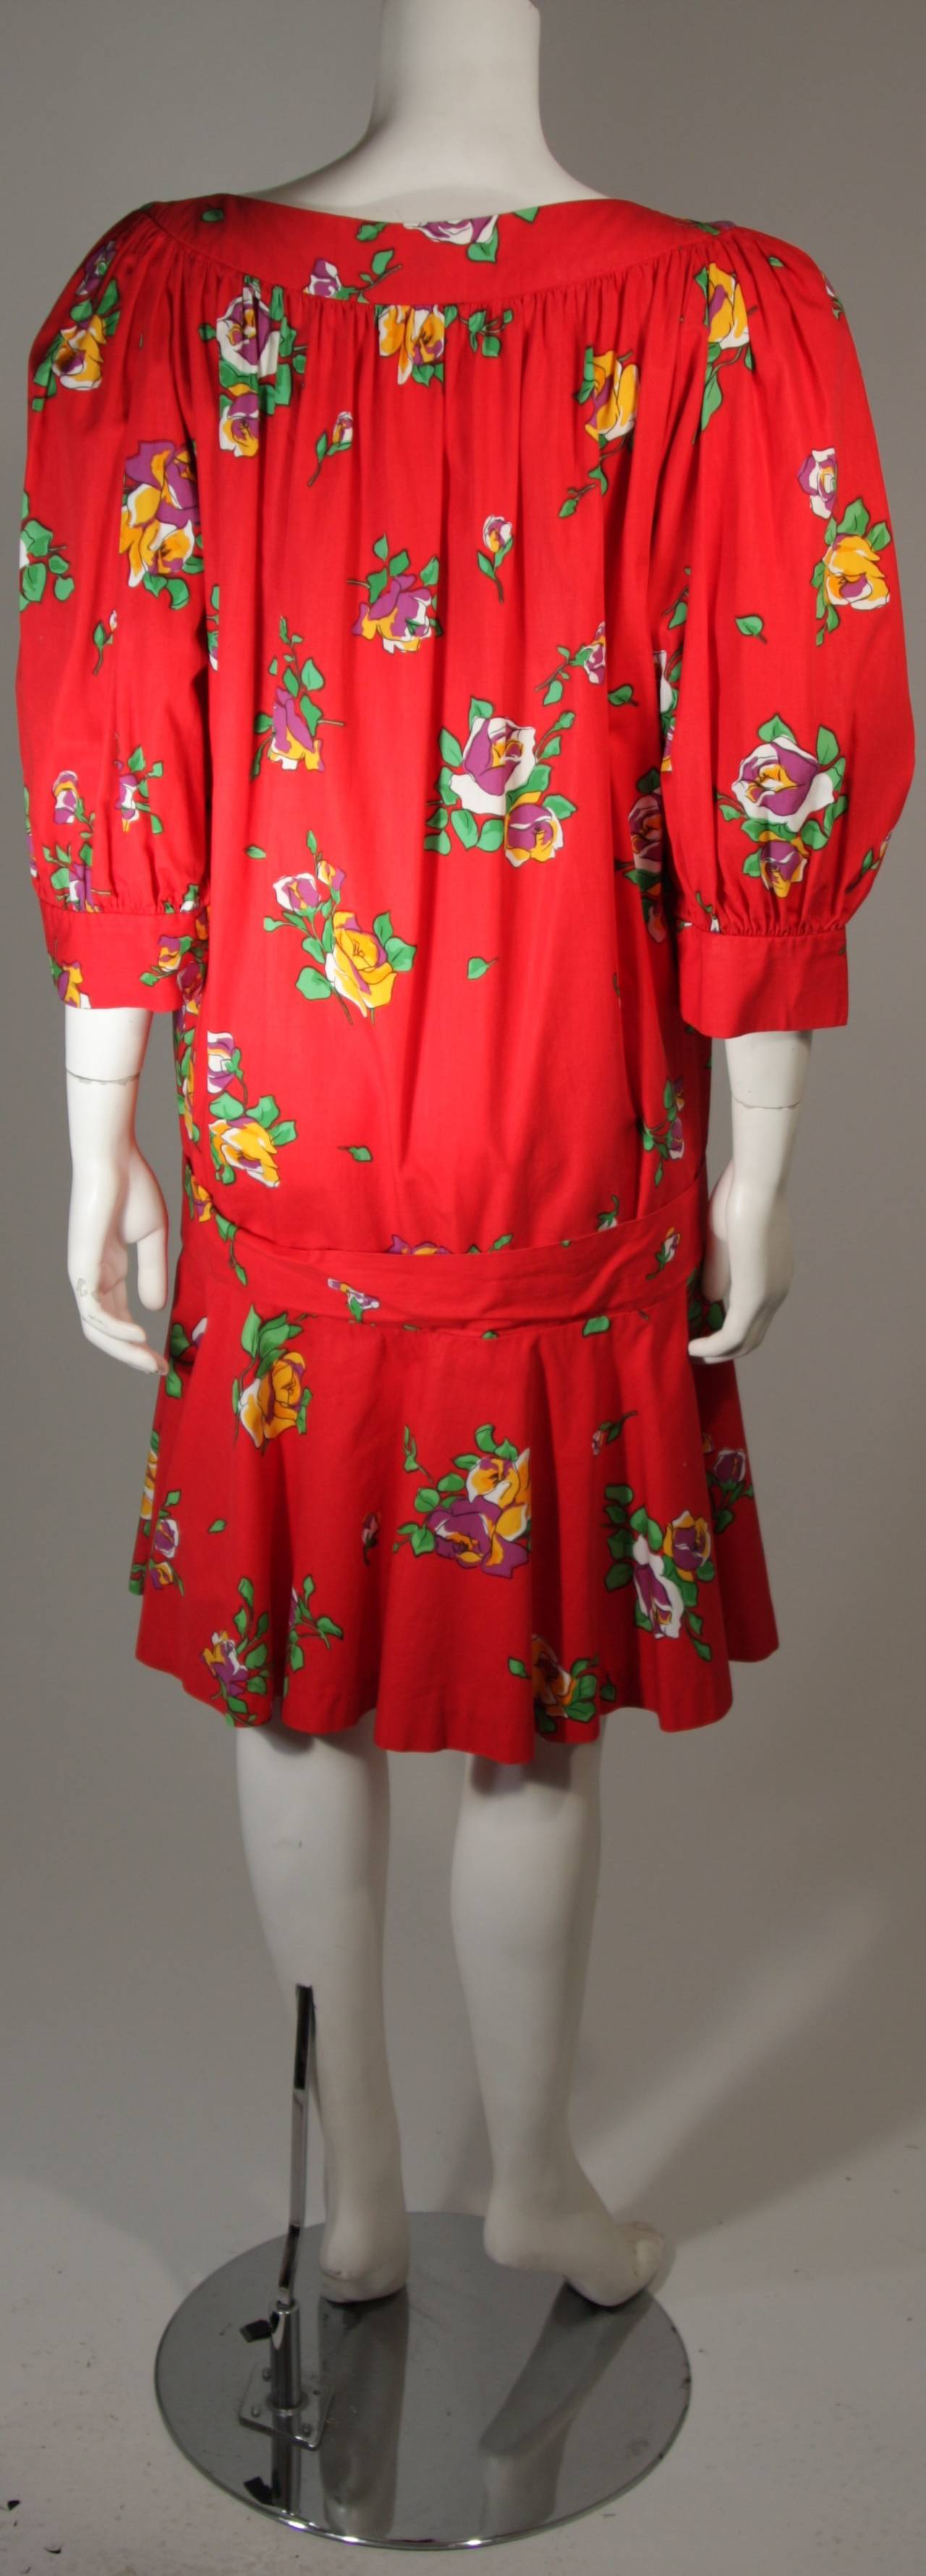 Yves Saint Laurent Red Cotton Drop Waist Dress with Floral Motif Size 36 For Sale 4